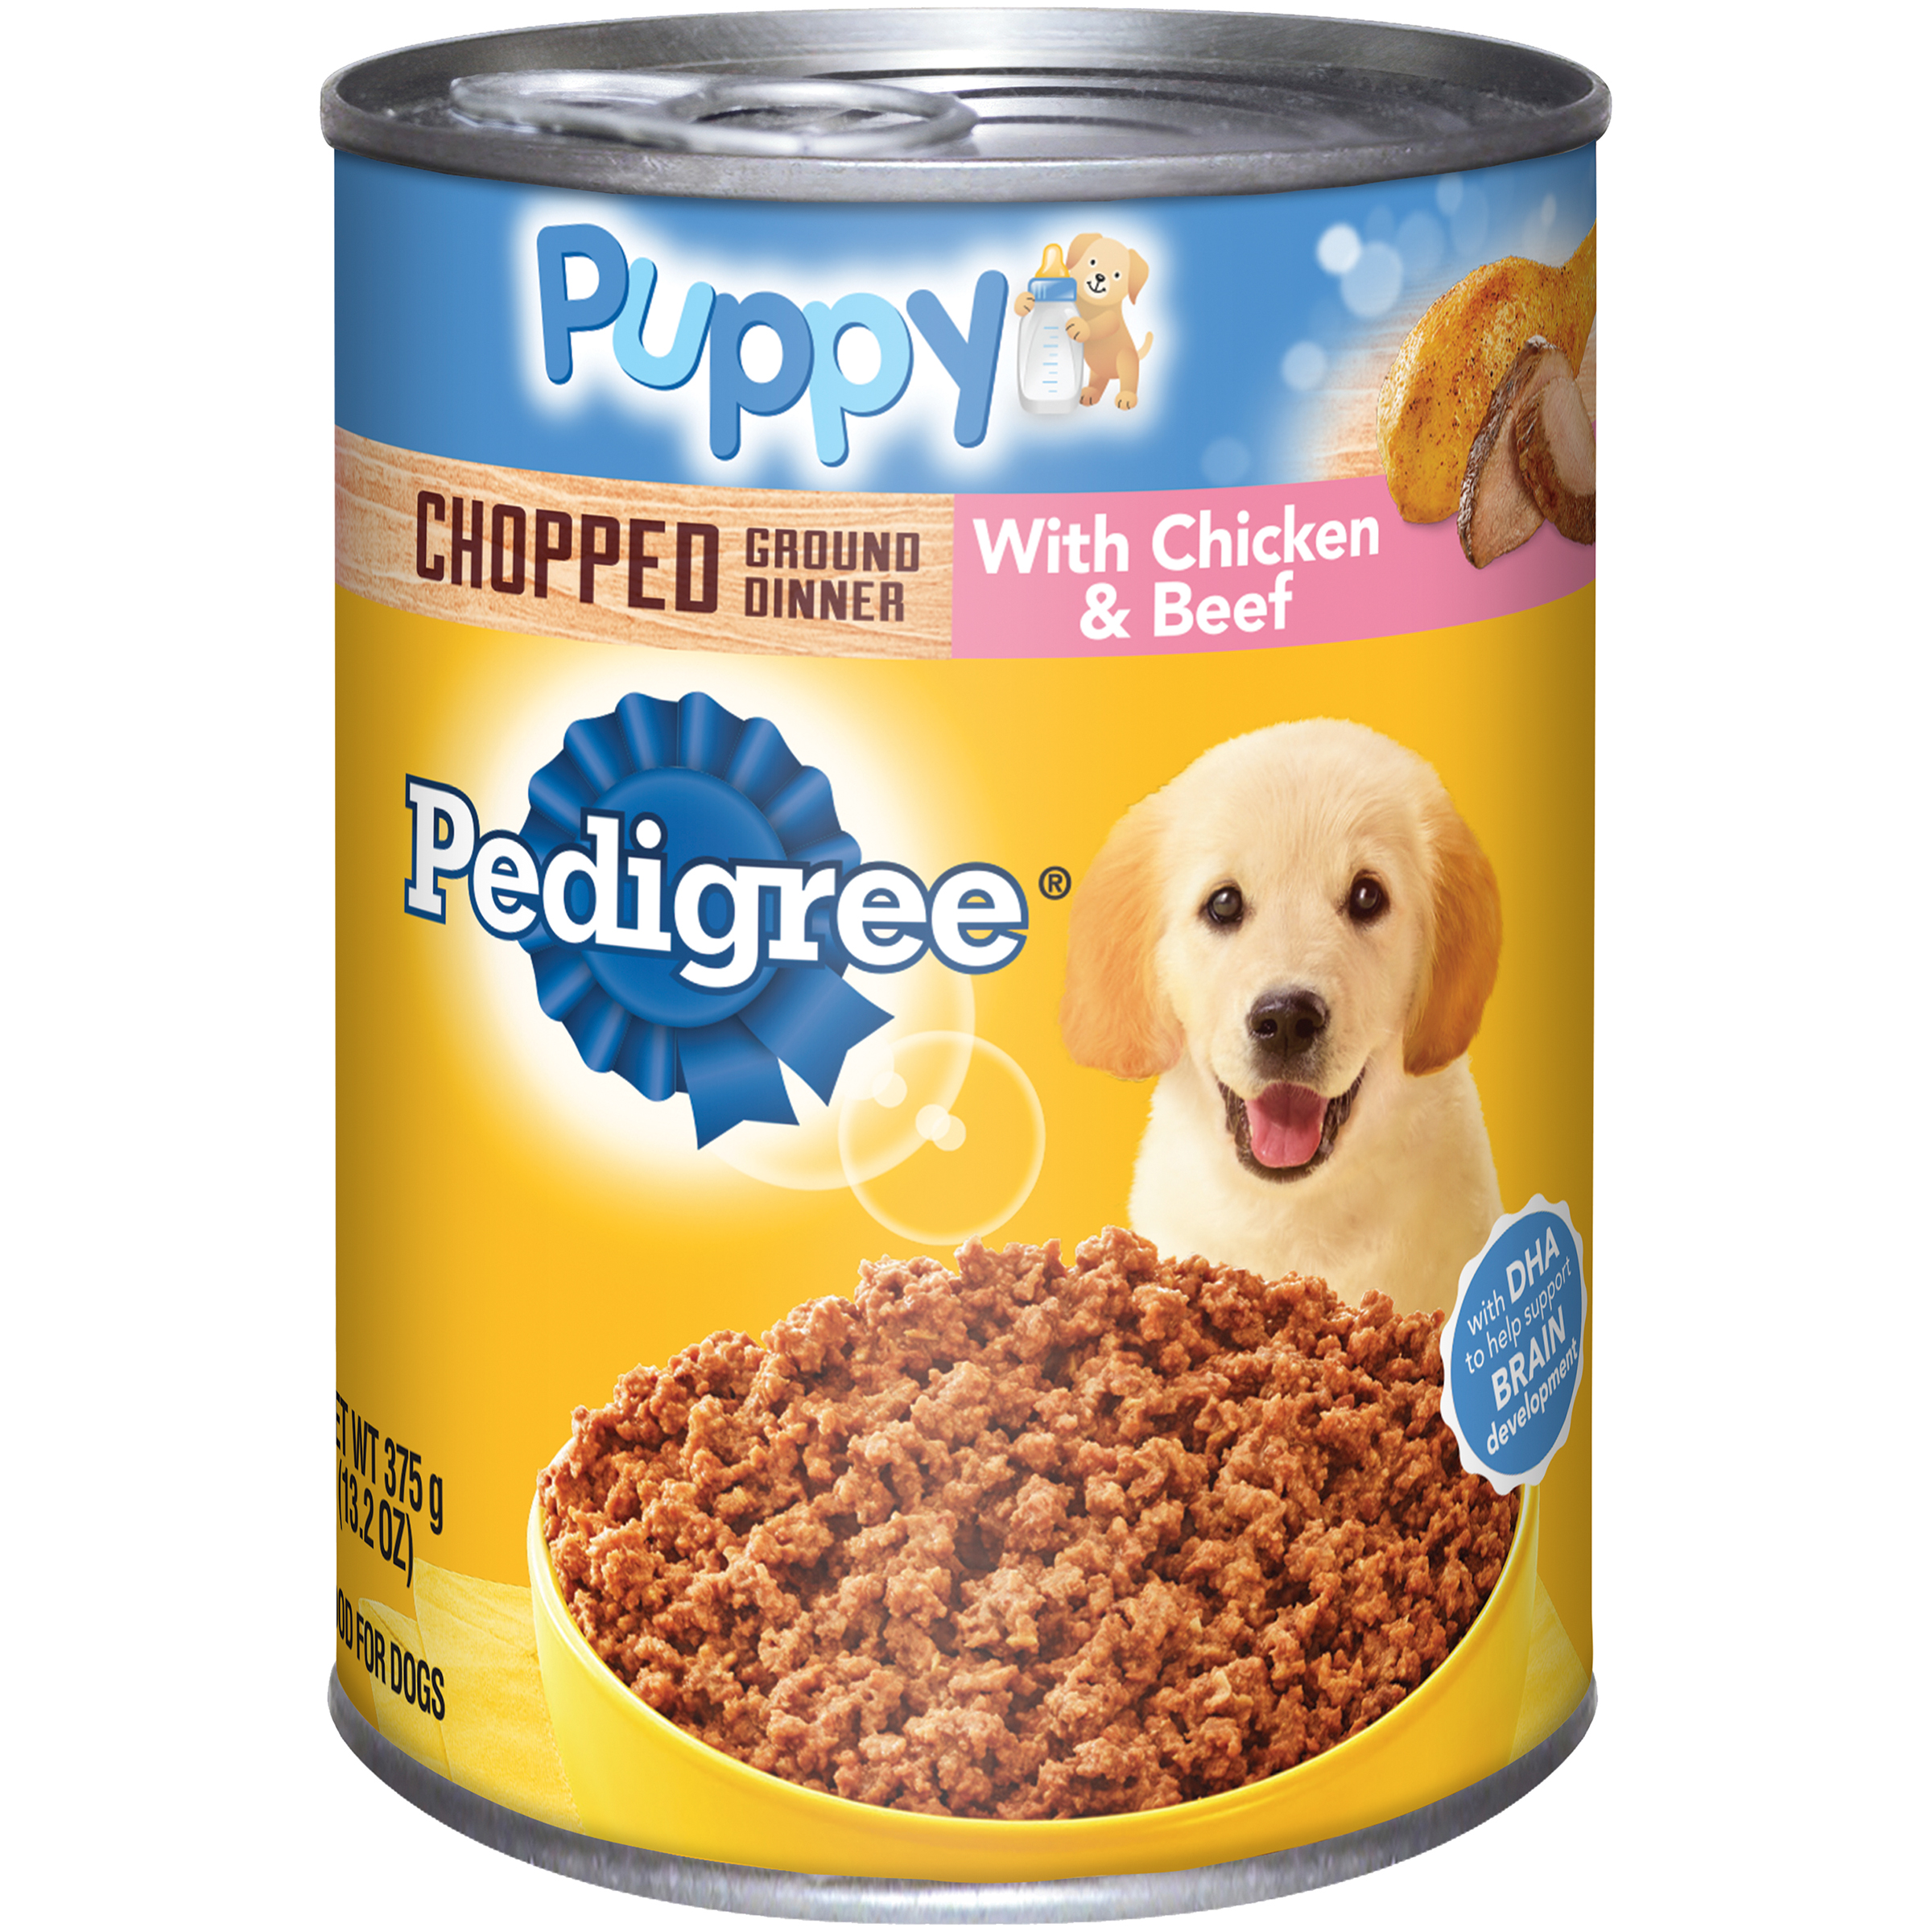 Pedigree Puppy Food for Puppies, Traditional Ground Dinner, Chicken & Beef Dinner, 13.2 oz (375 g)